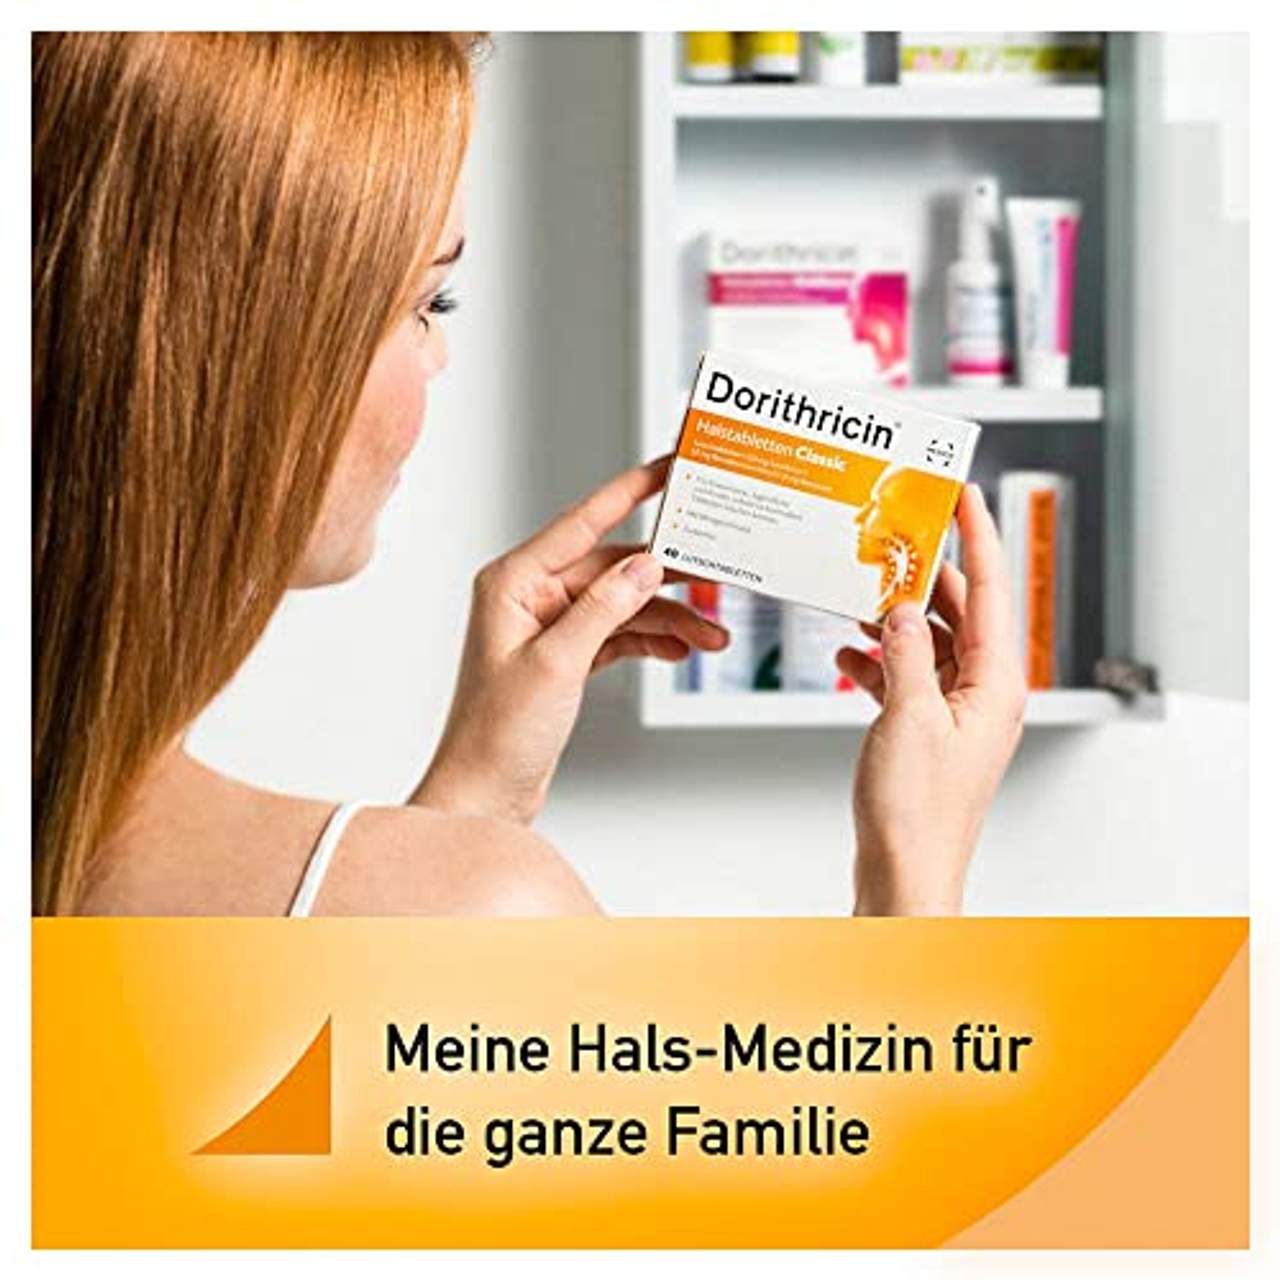 MEDICE Arzneimittel Pütter GmbH&Co.KG Dorithricin Halstabletten Classic